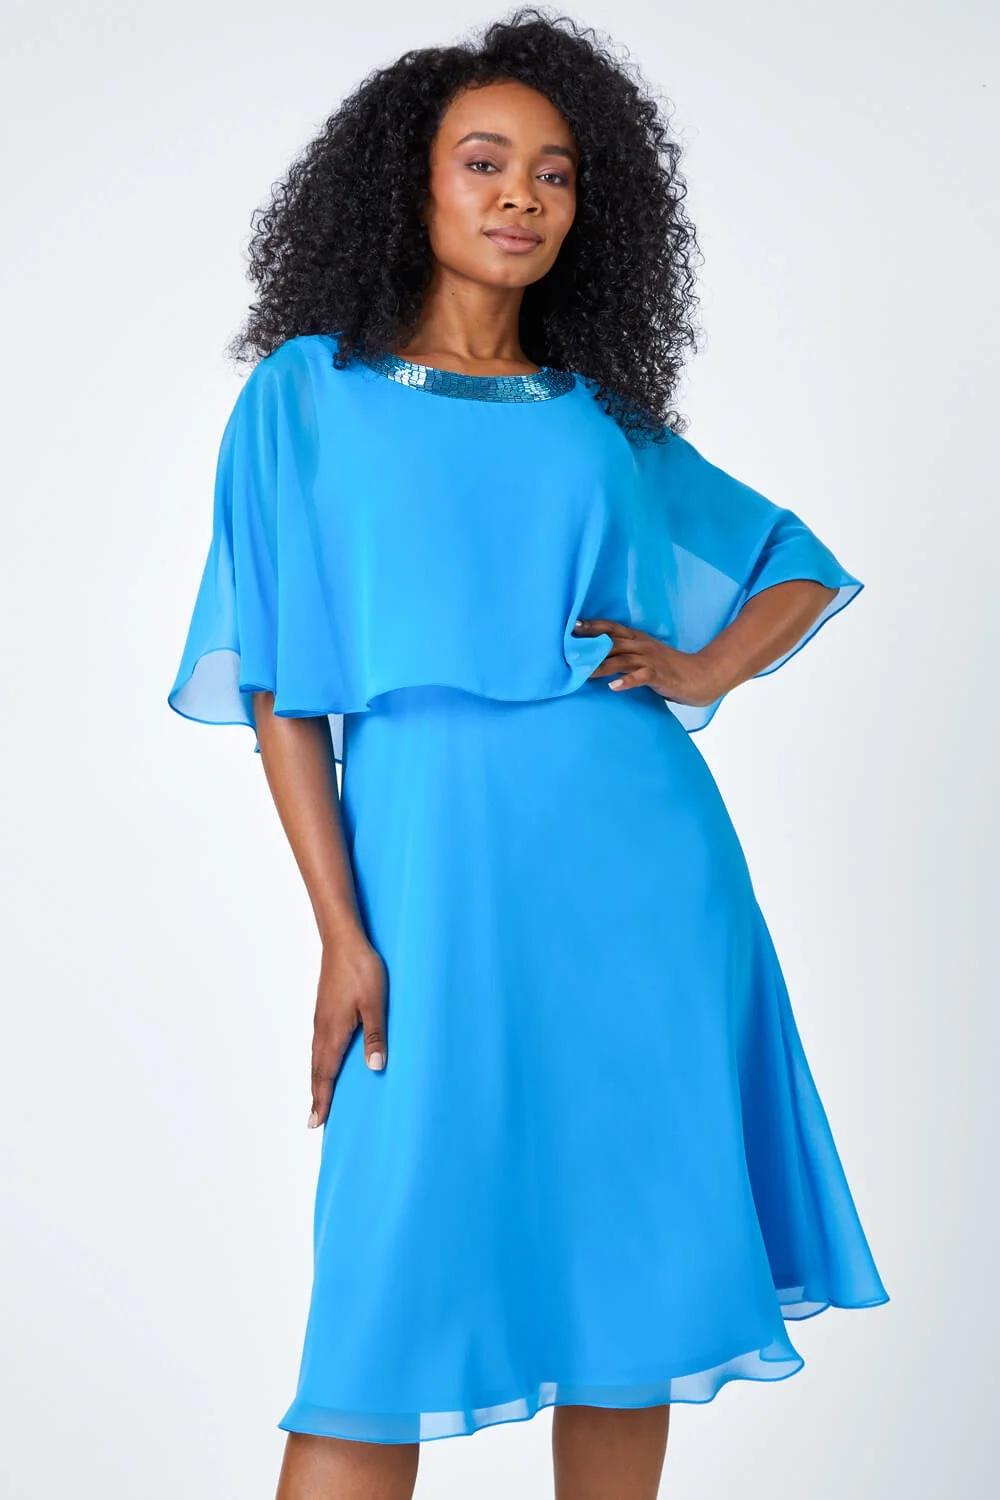 Buy Roman Blue Petite Sleeveless Floral Chiffon Dress from the